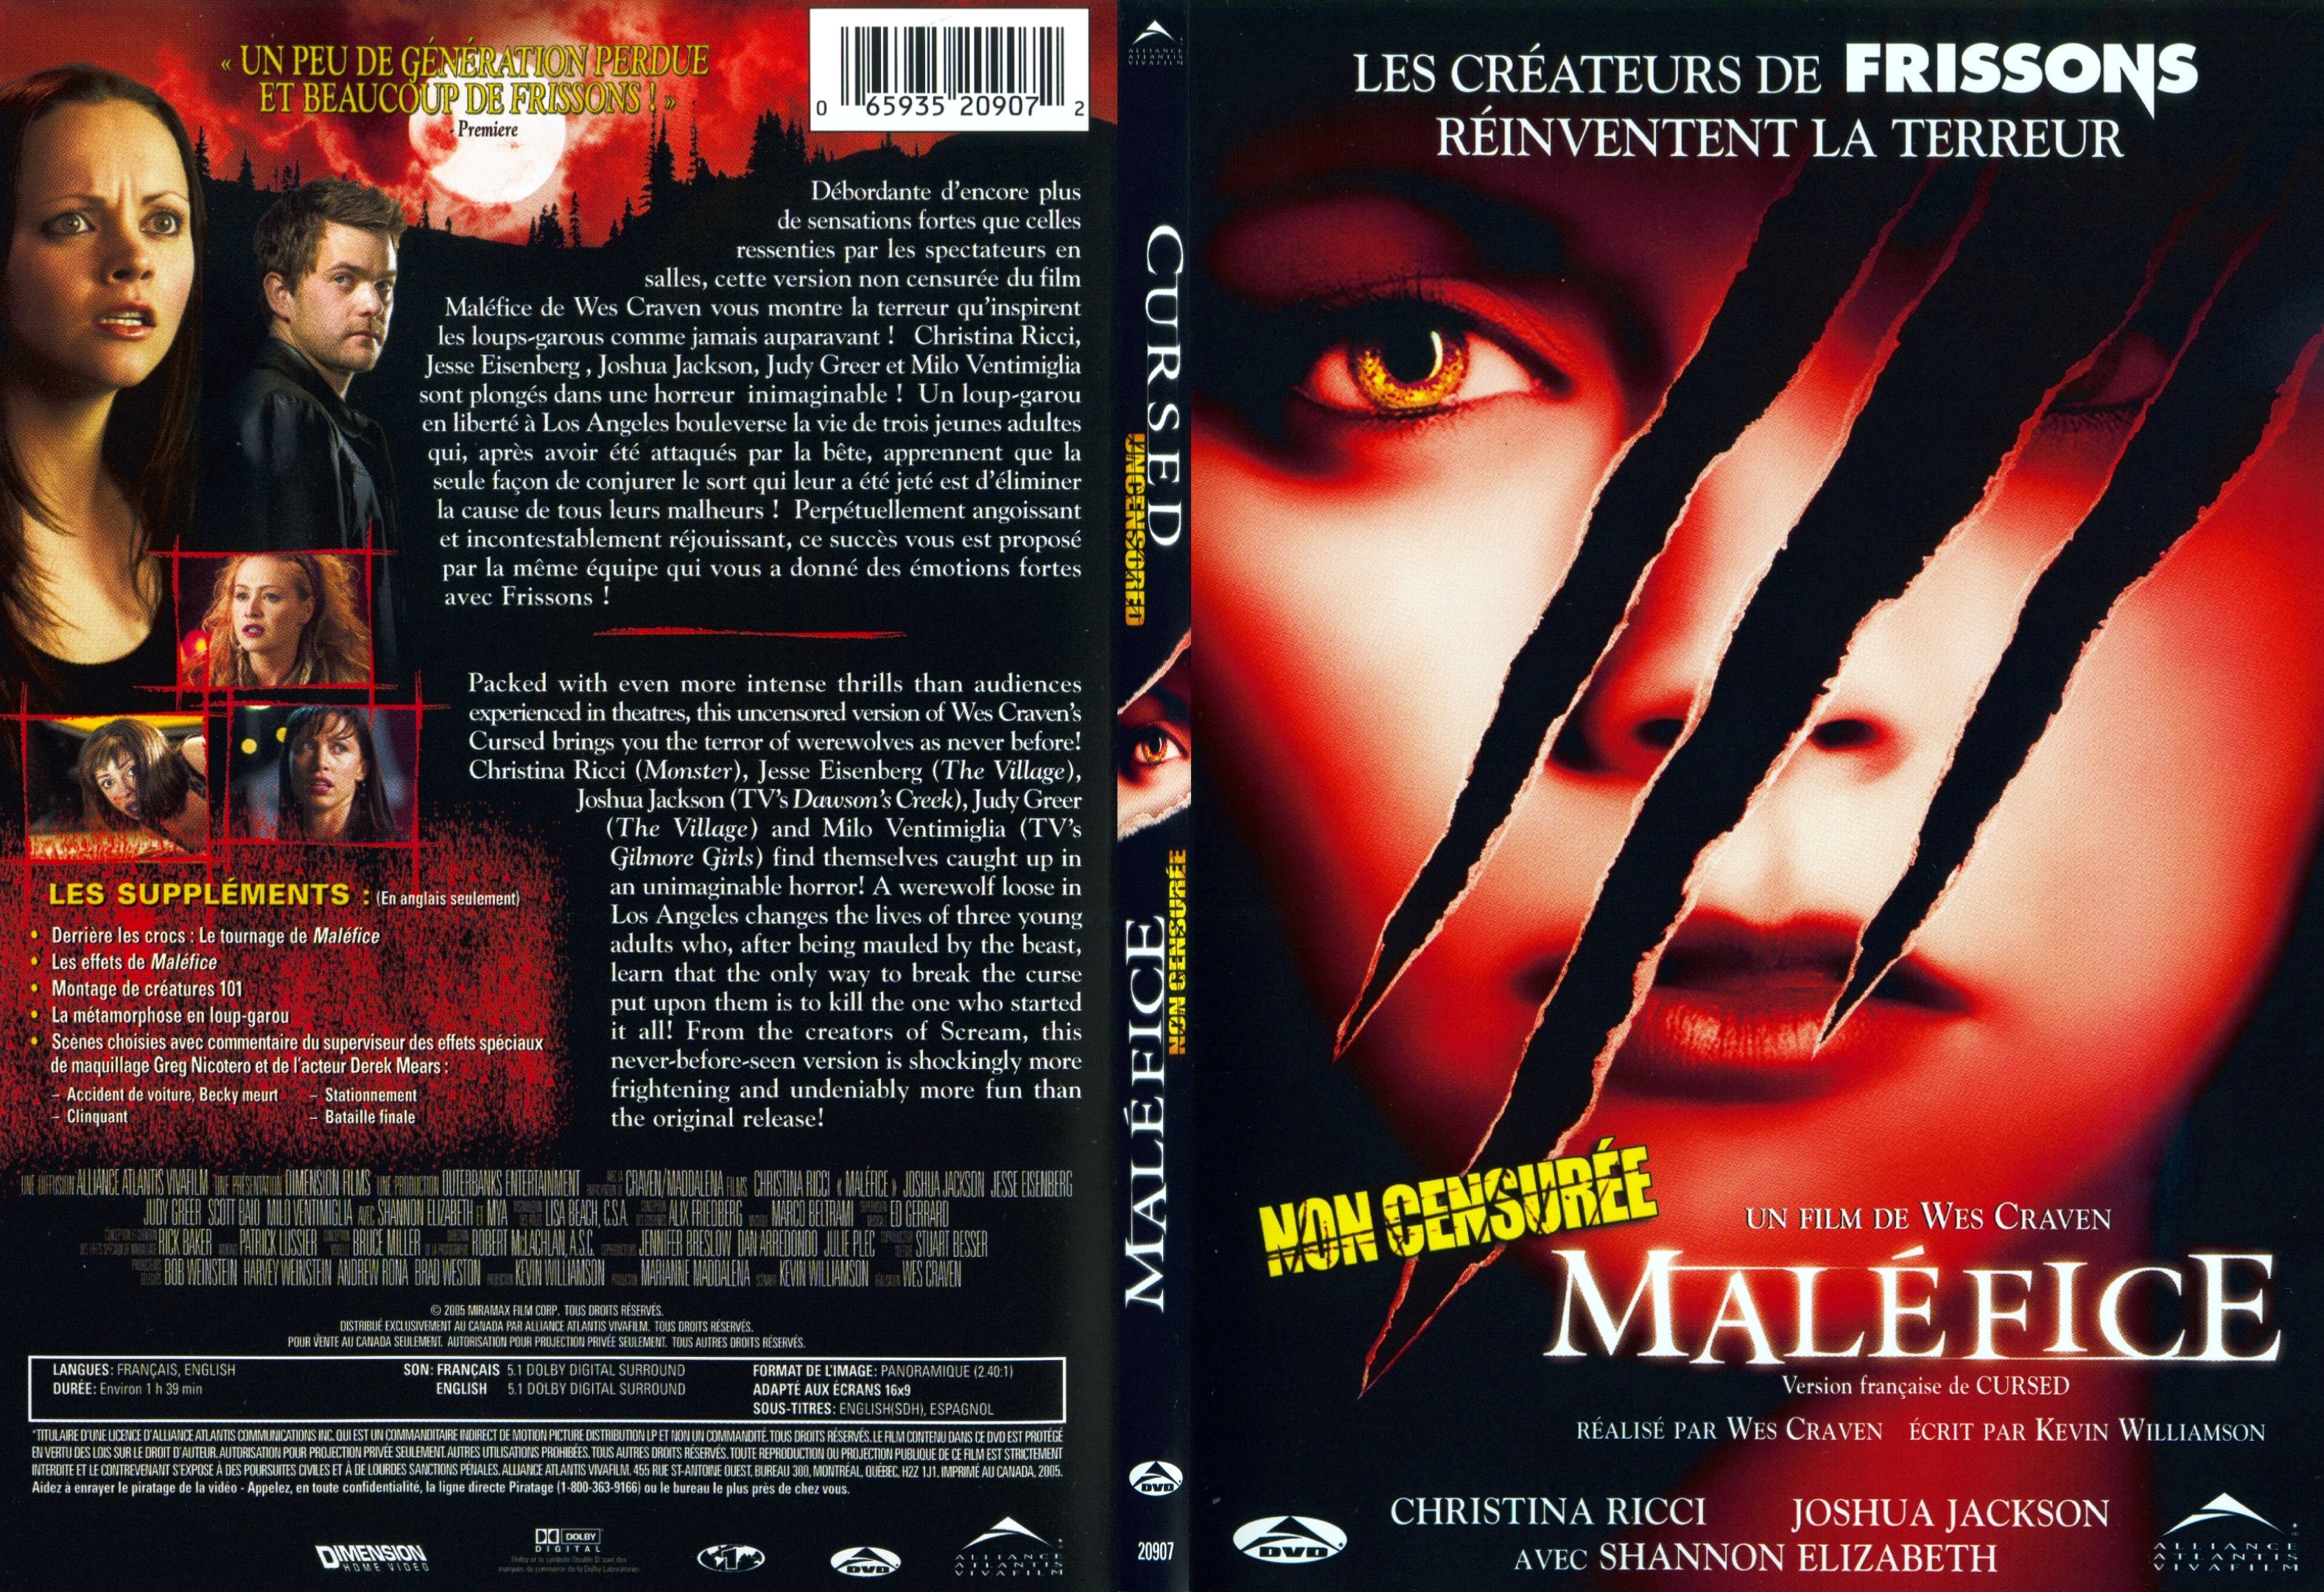 Jaquette DVD Malefice - Cursed - SLIM